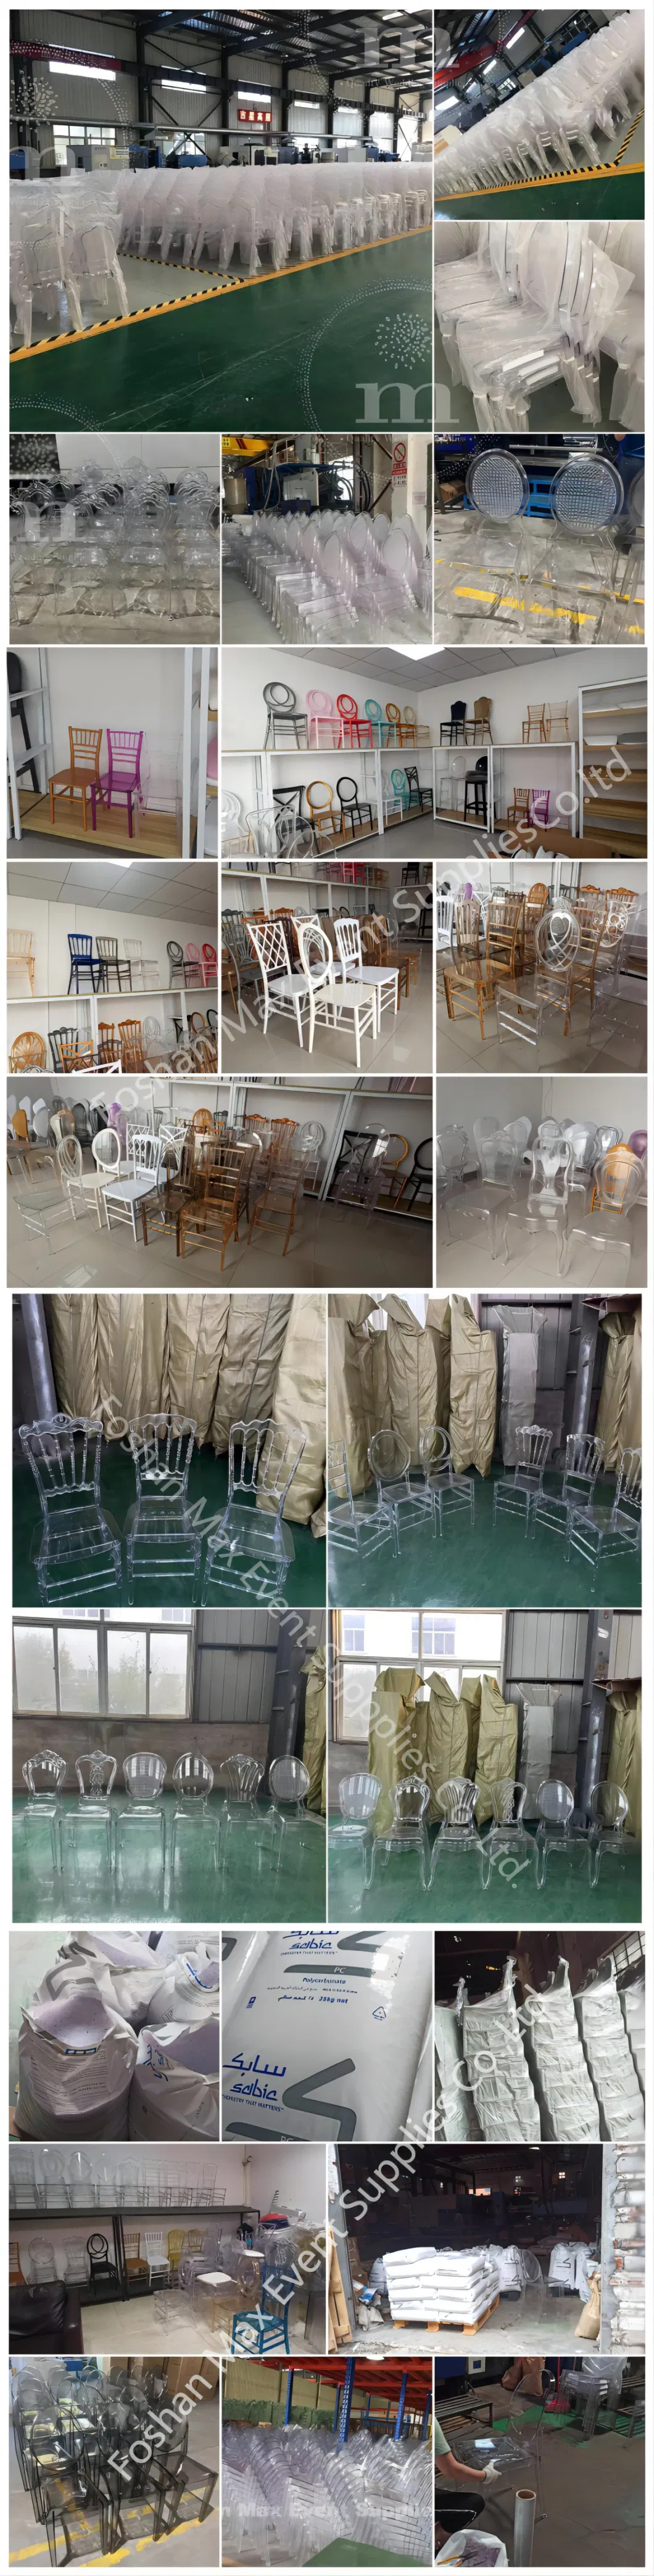 Royal Acrylic Hotel Restaurant Chiavari Banquet Party Event Wedding Dining Chiavari Chair